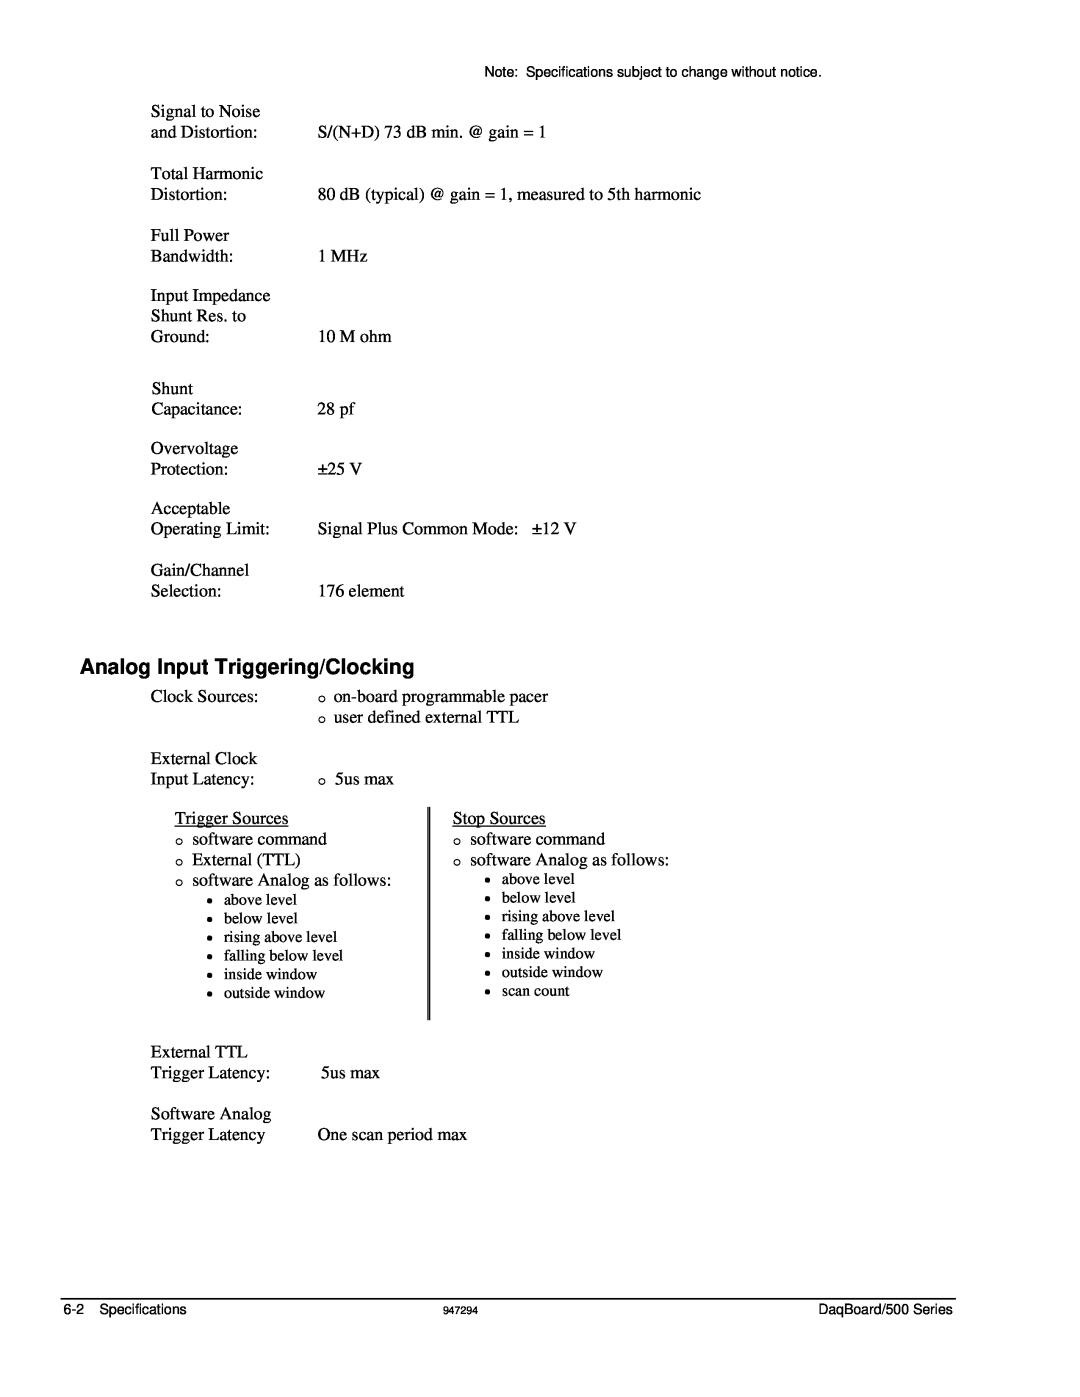 Omega OMB-DAQBOARD-500 manual Analog Input Triggering/Clocking, Specifications 